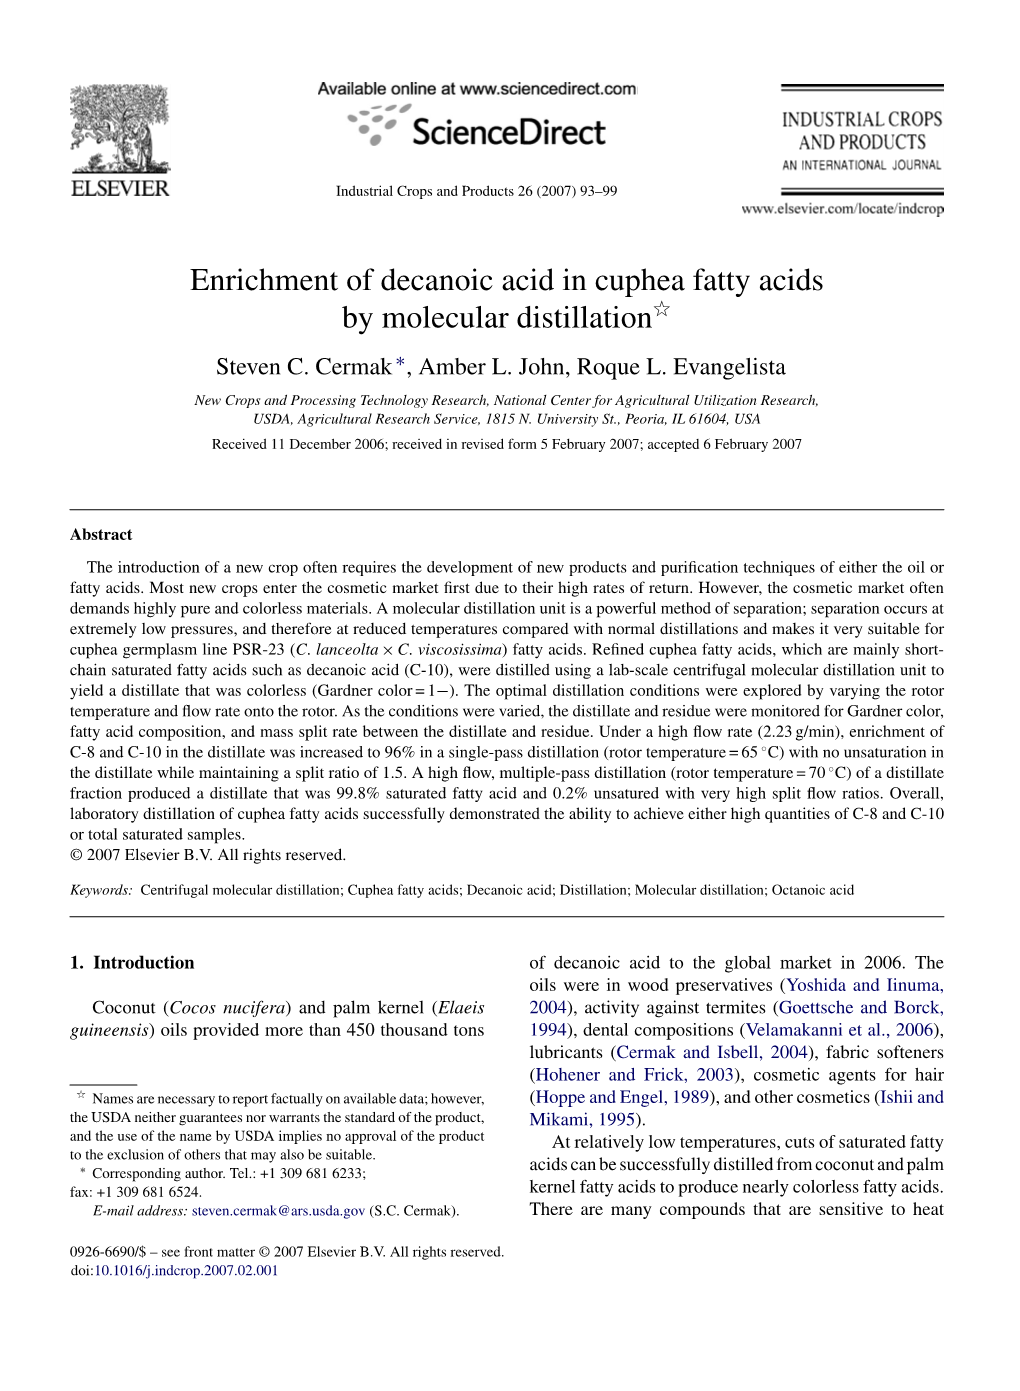 Enrichment of Decanoic Acid in Cuphea Fatty Acids by Molecular Distillationଝ Steven C